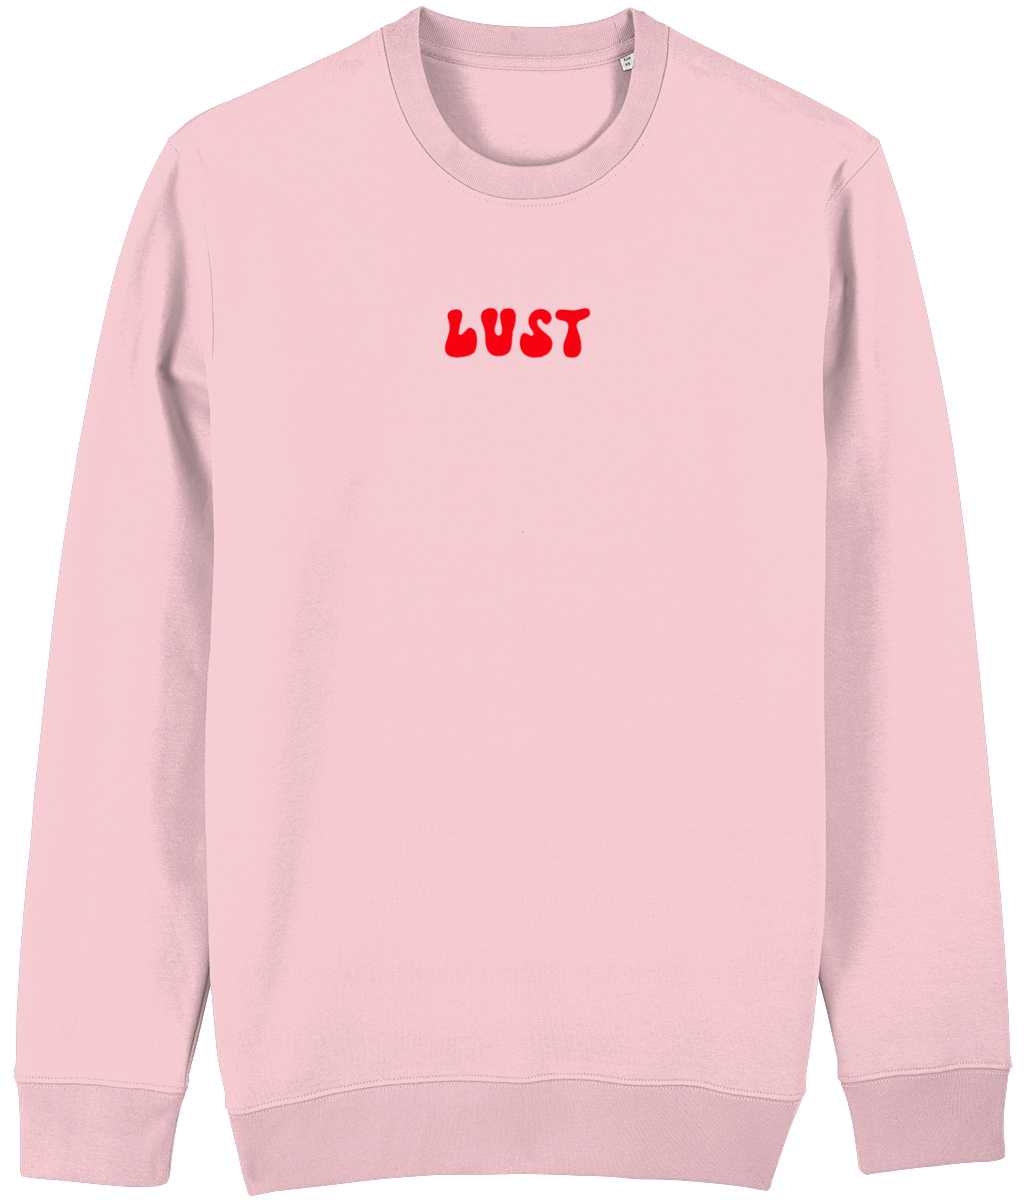 Lust non gender sweatshirt Cherchez La Femme brand